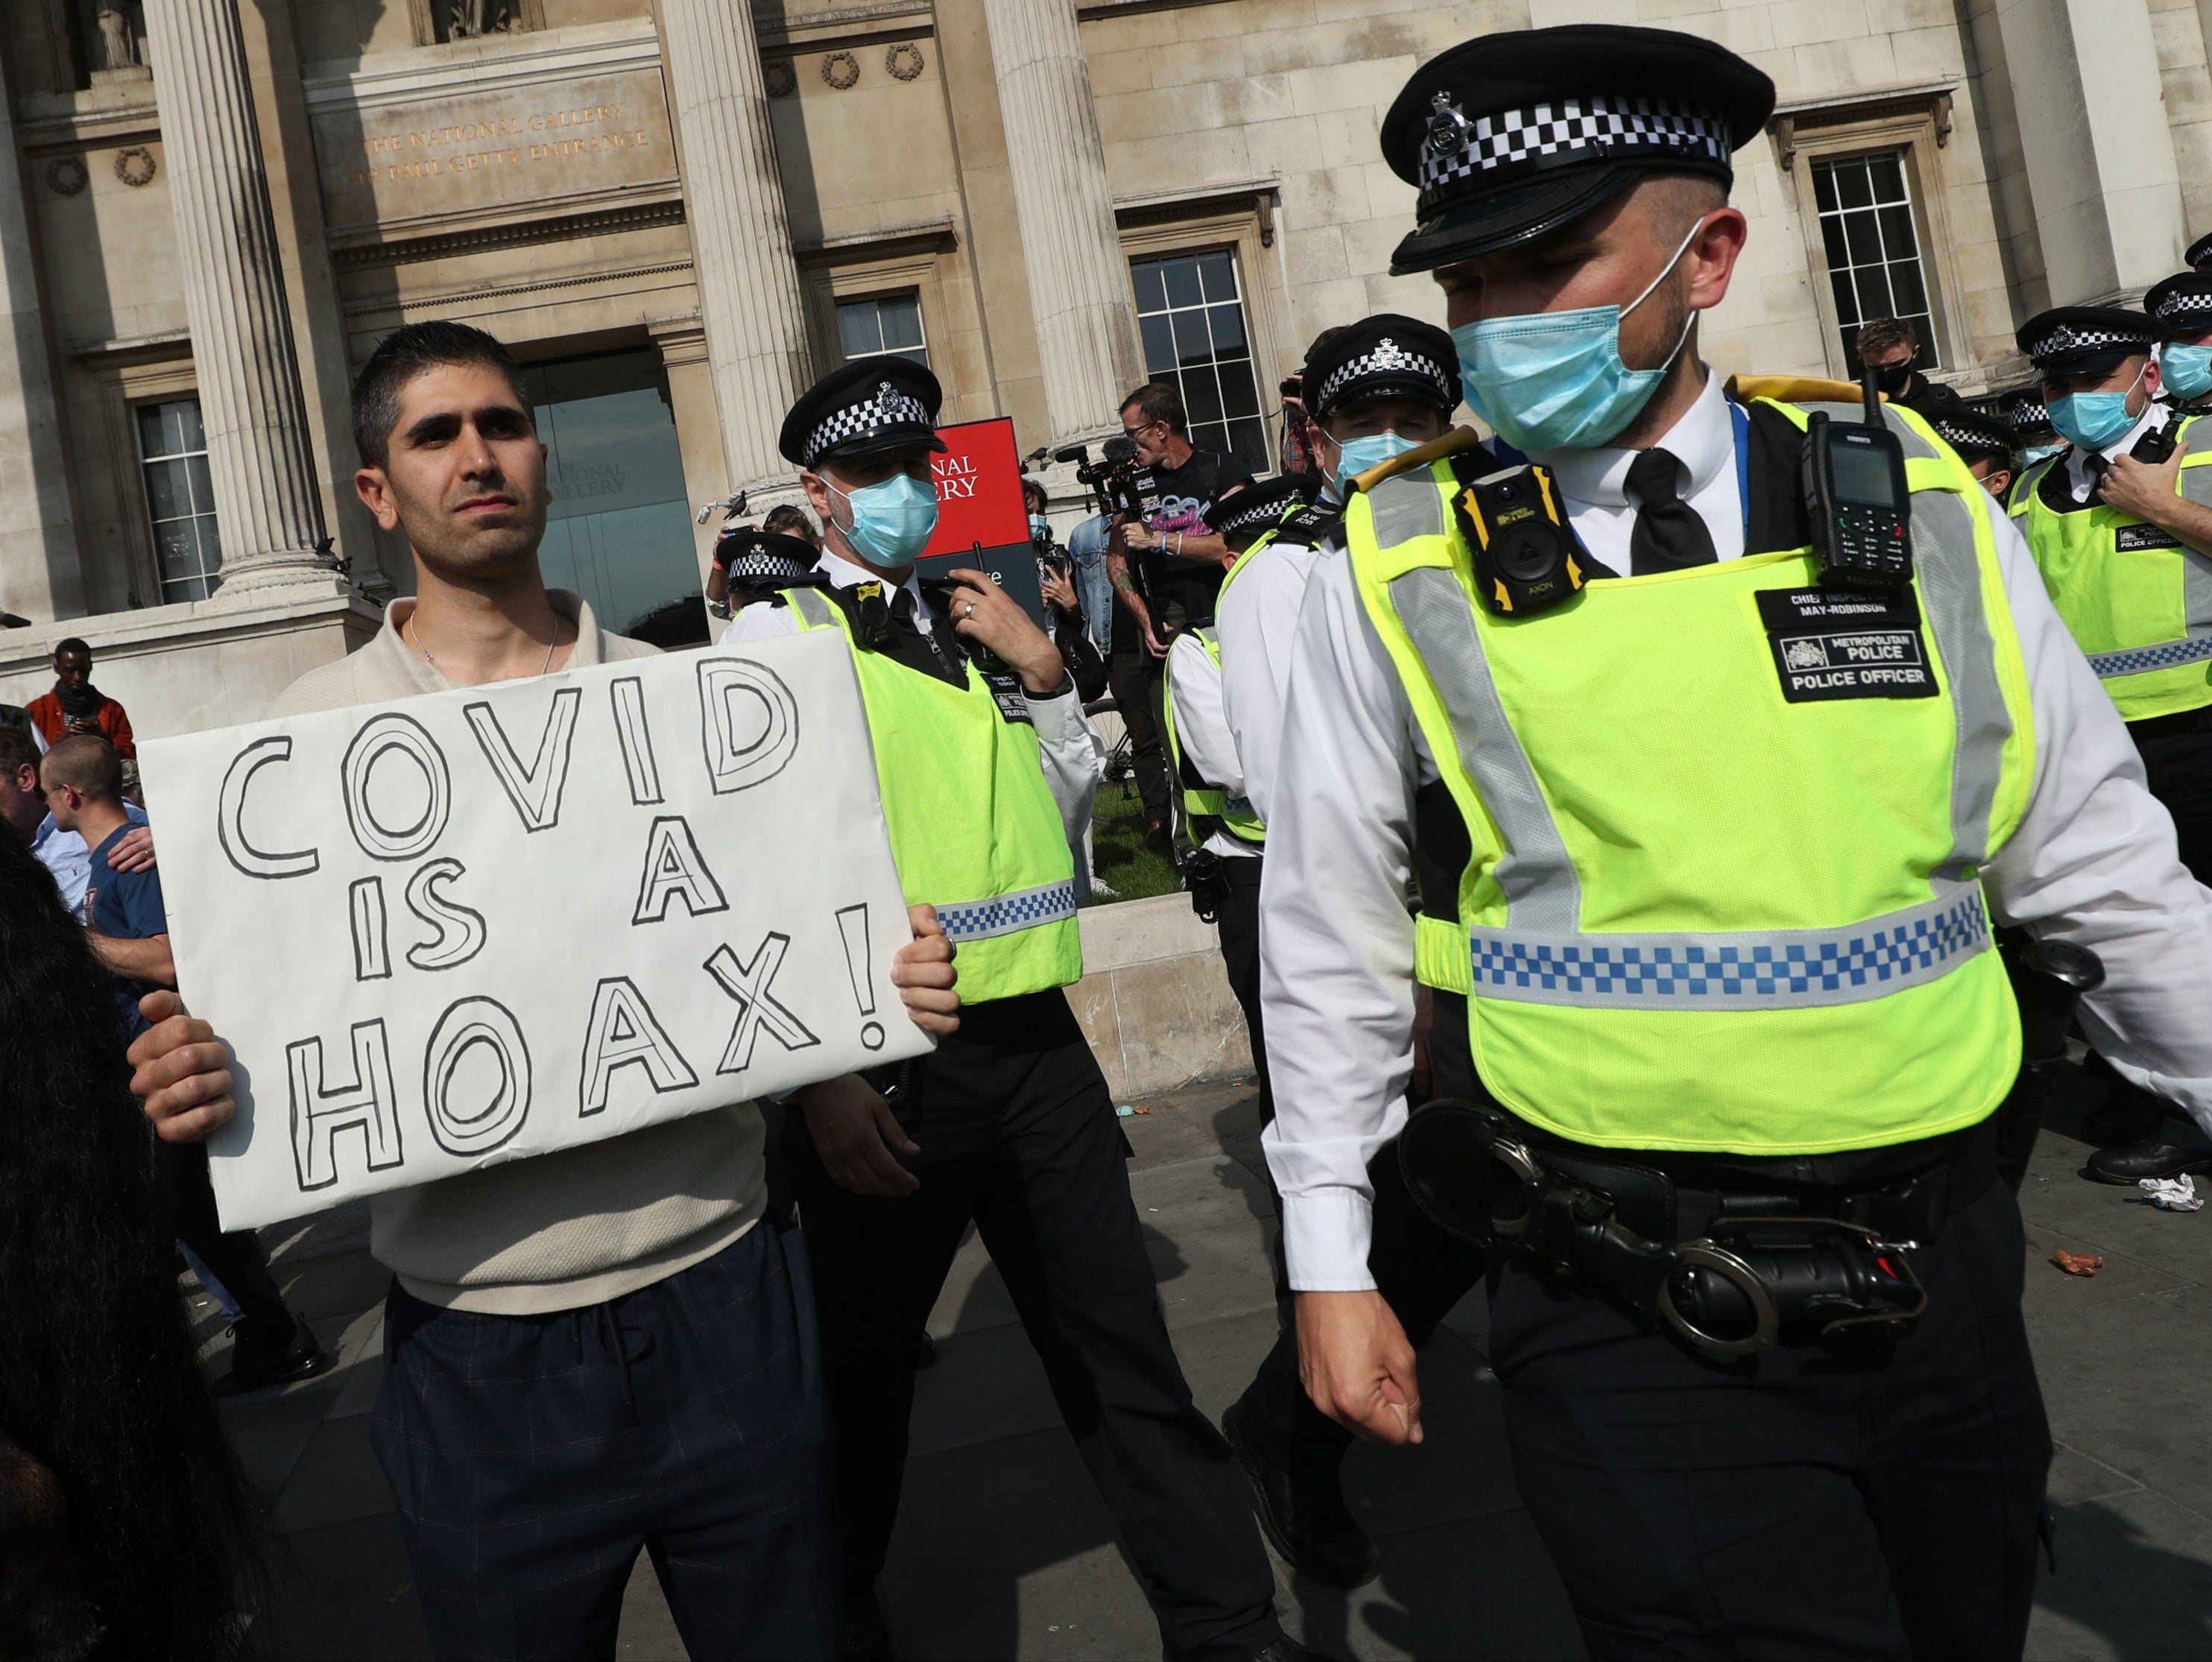 An anti-lockdown protest in London's Trafalgar Square on 19 September